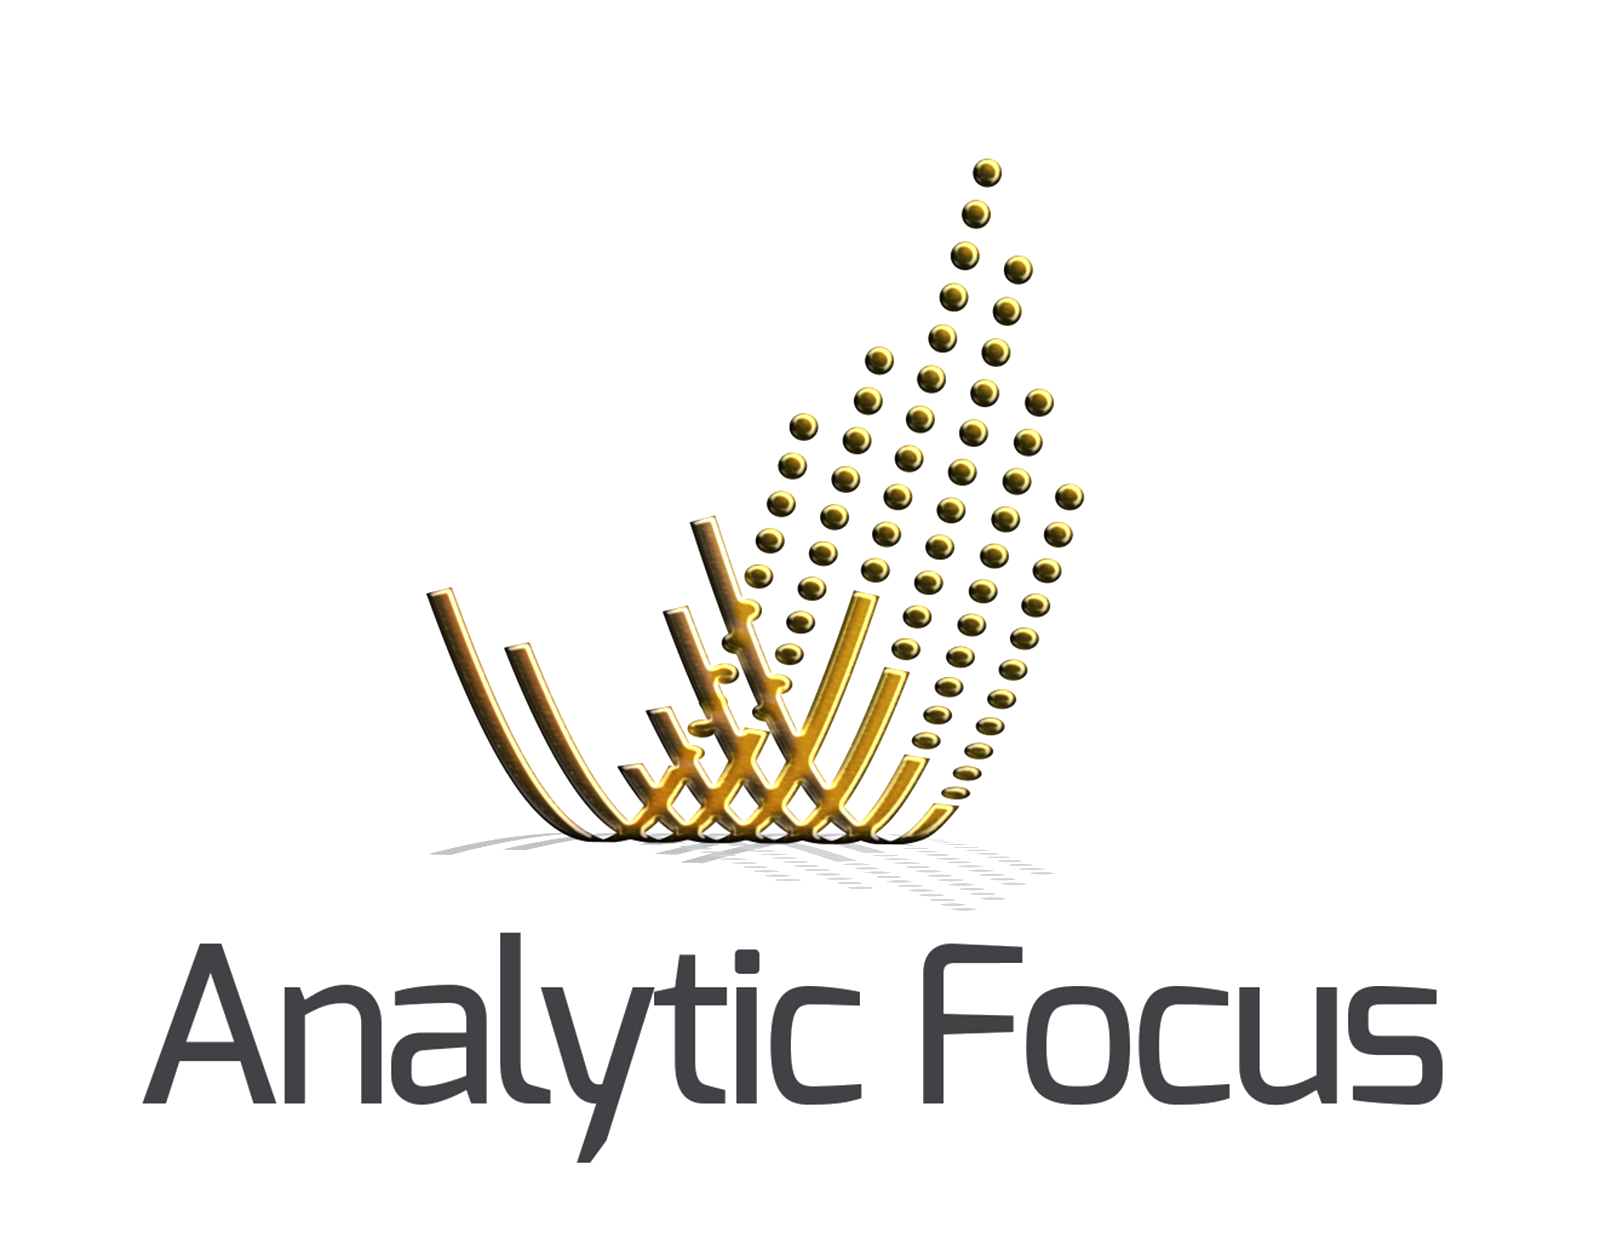 Analytic Focus